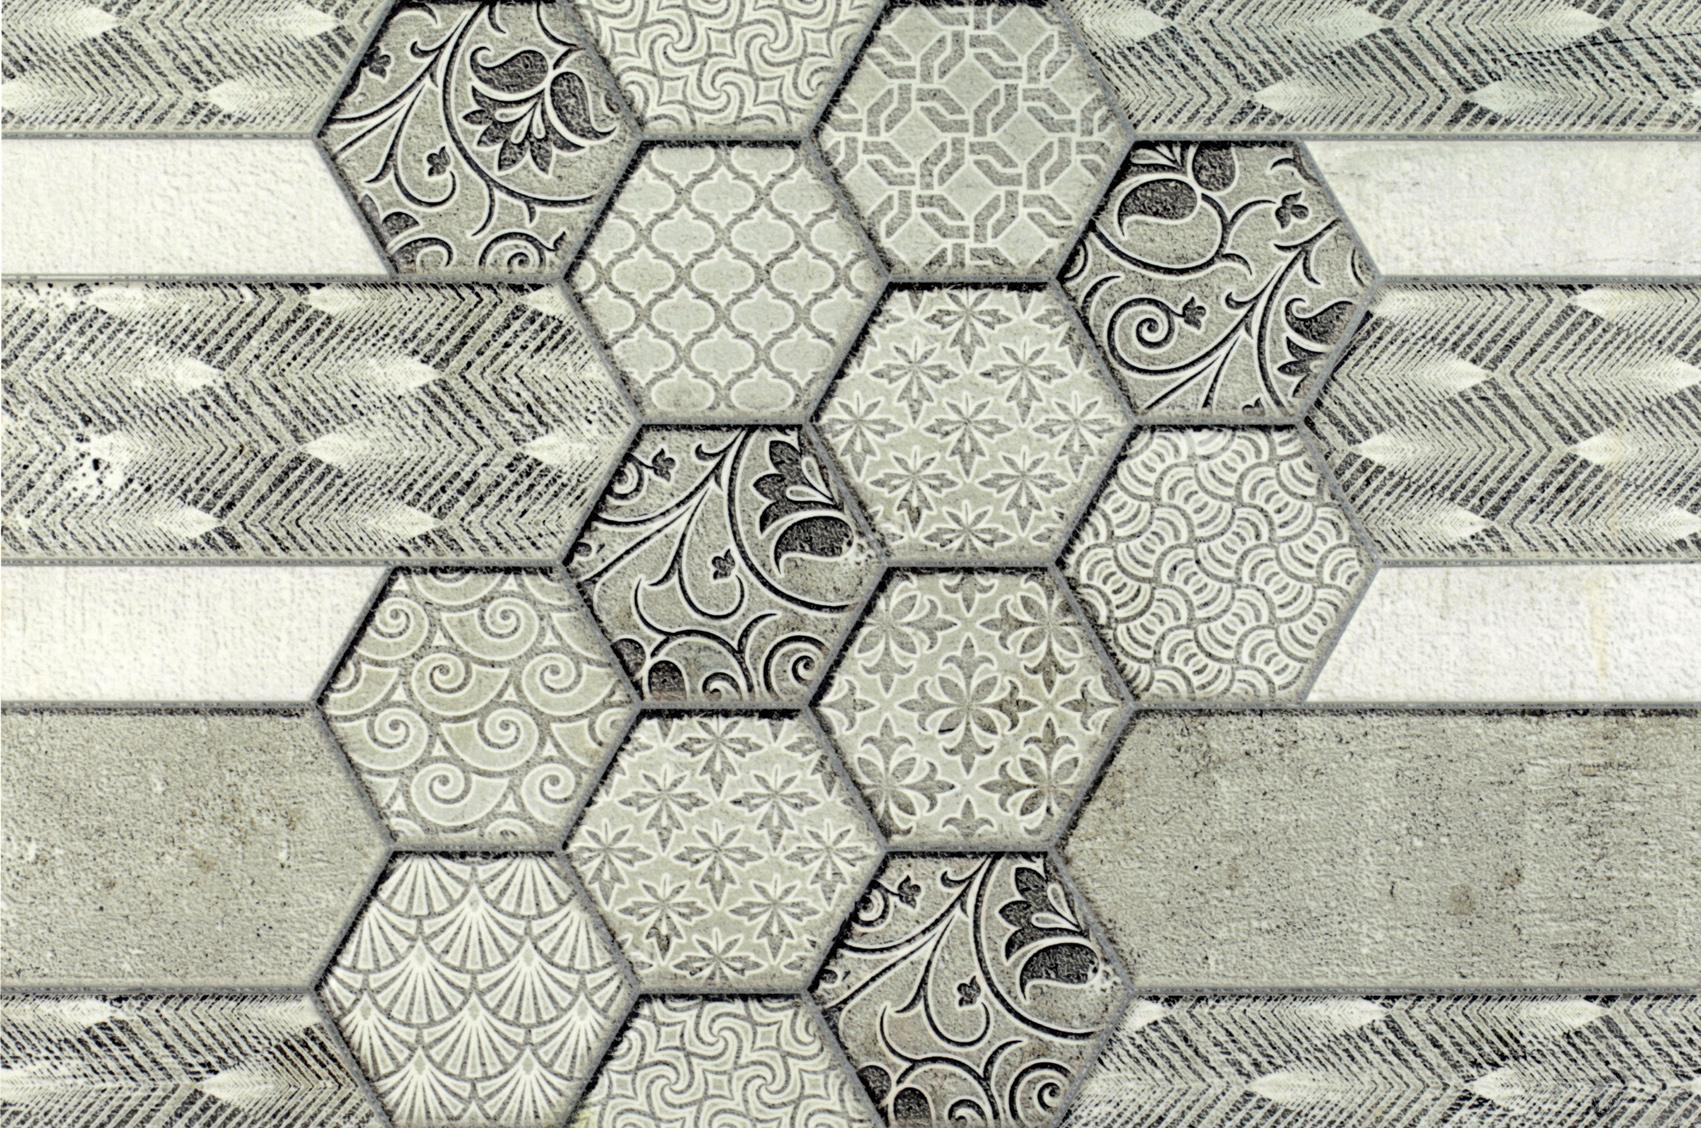 Pattern Tiles for Bathroom Tiles, Kitchen Tiles, Accent Tiles